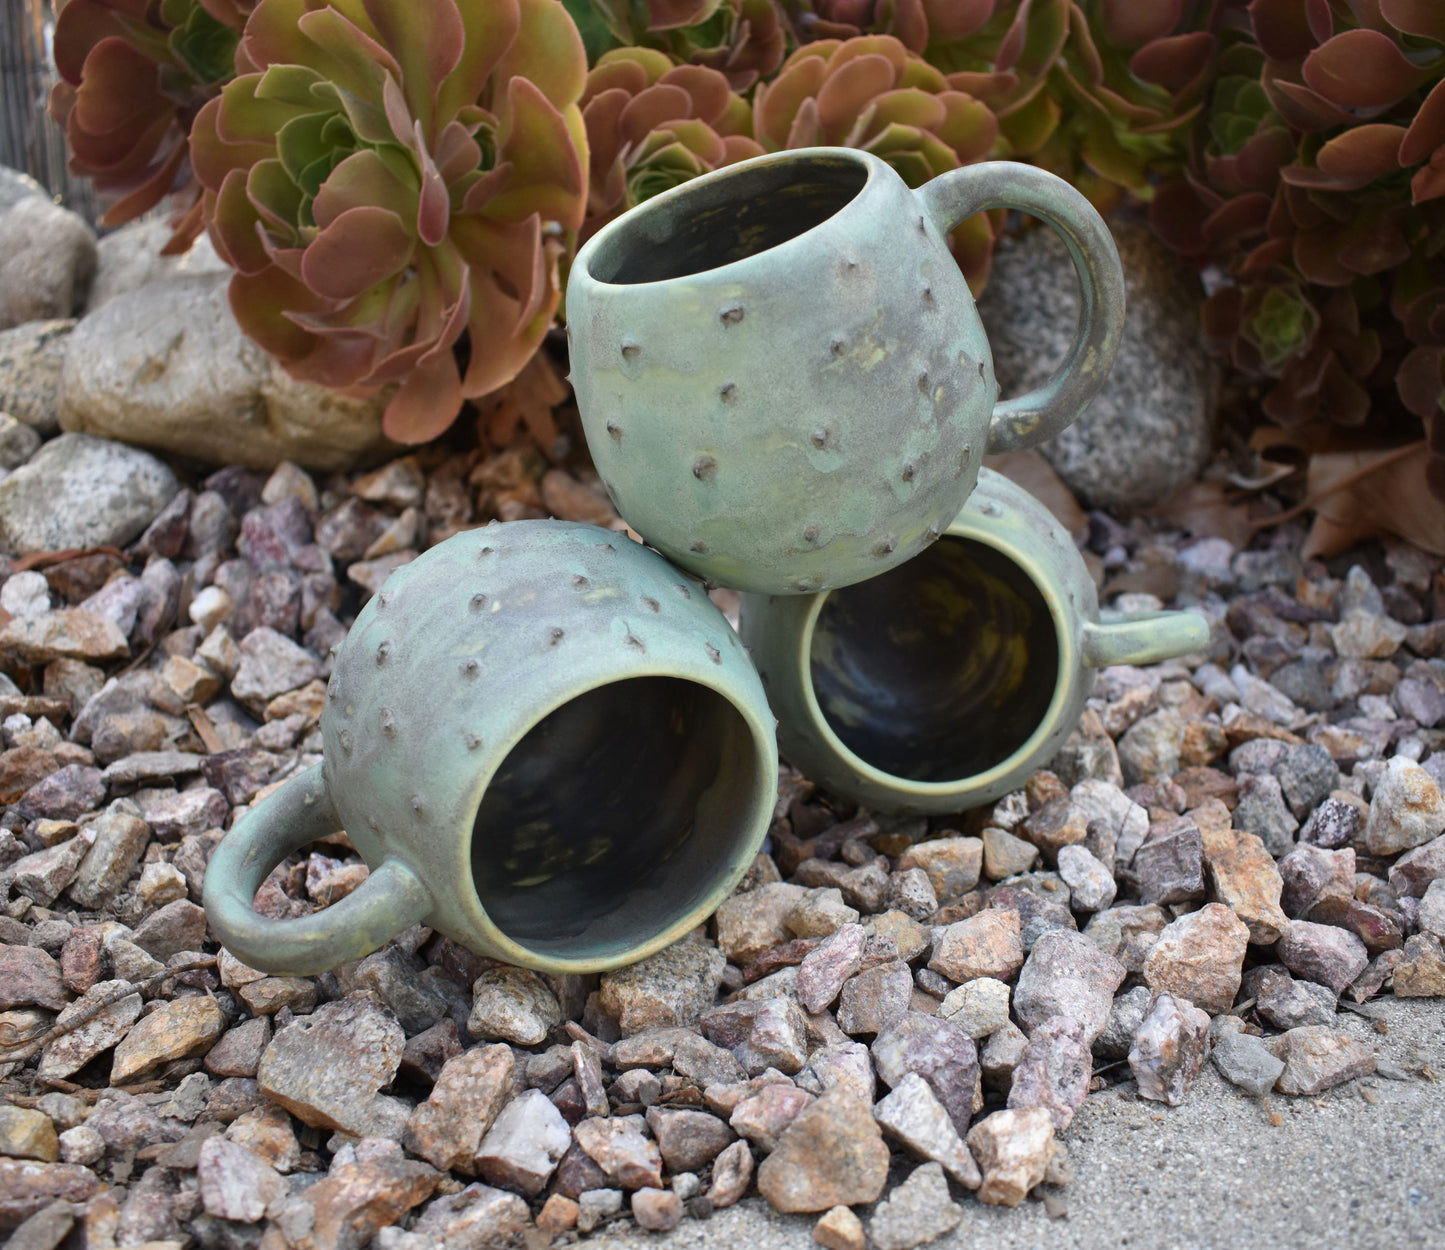 cactus mug